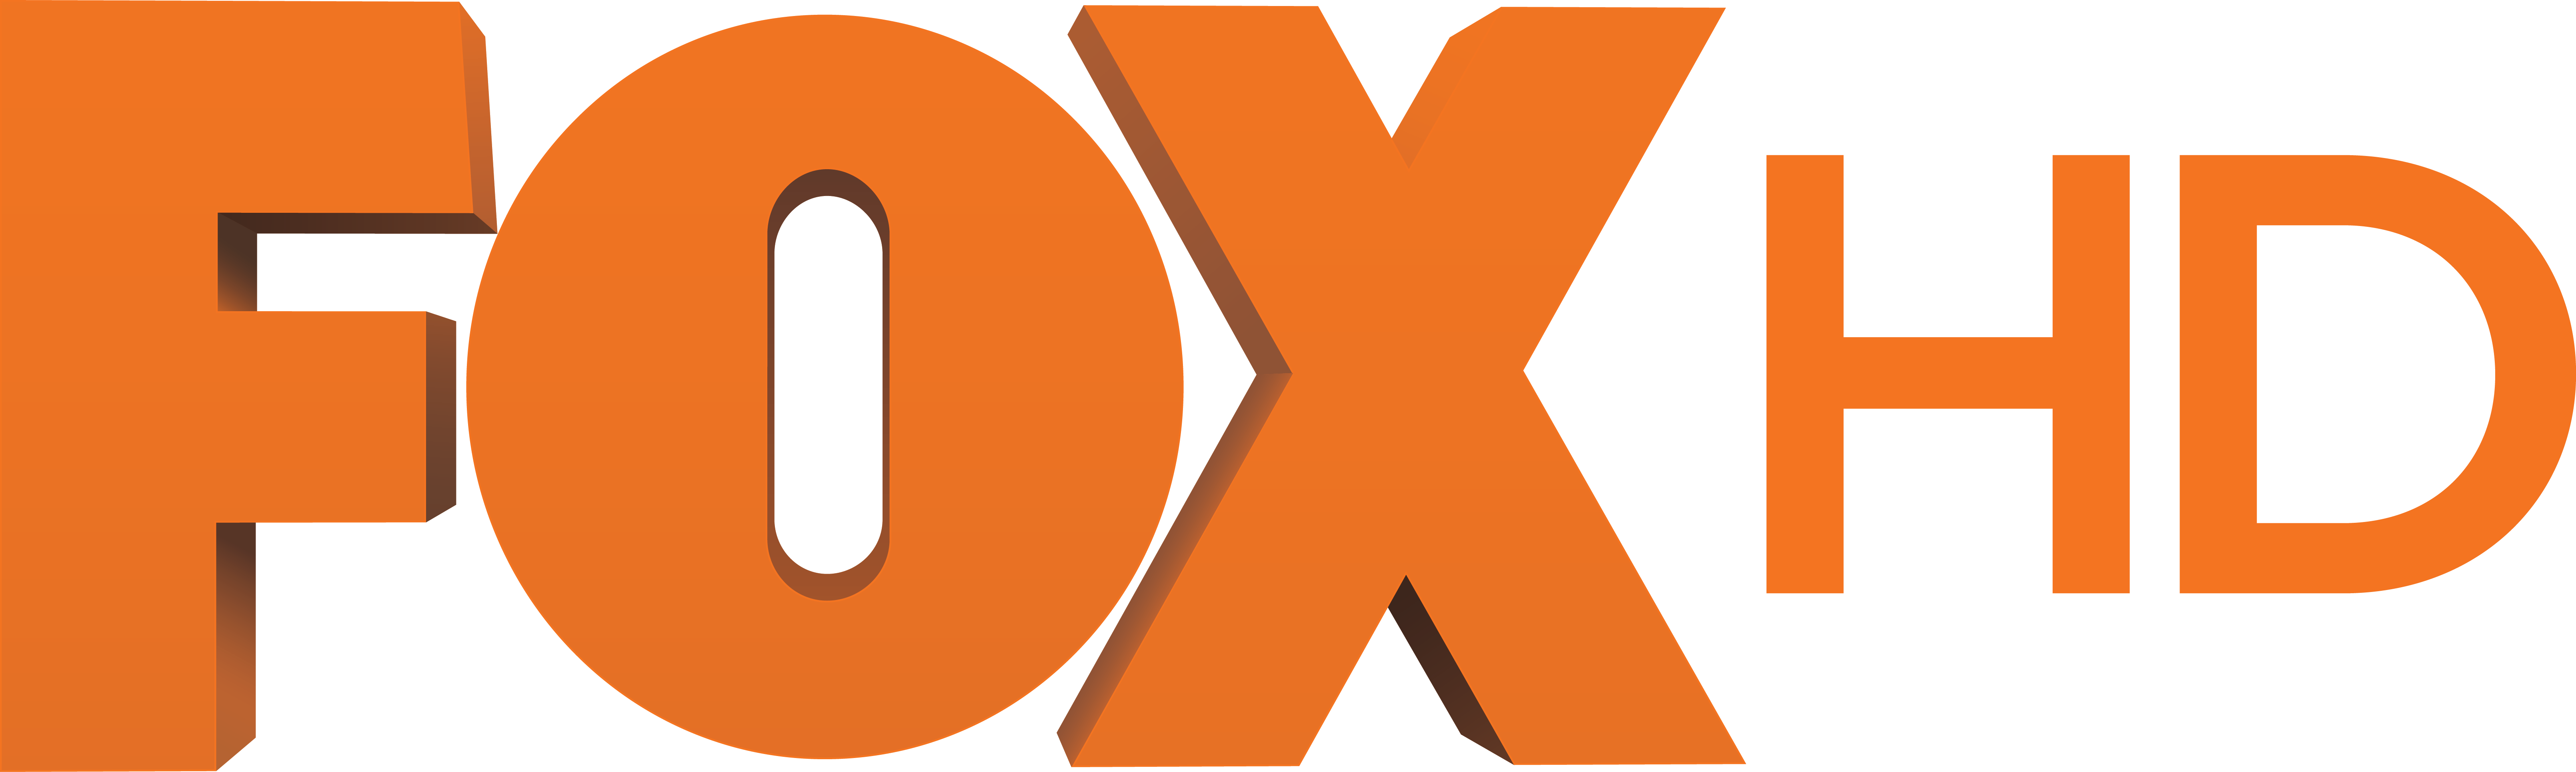 Fox ем. Телеканал Fox. Лого телеканала Фокс.